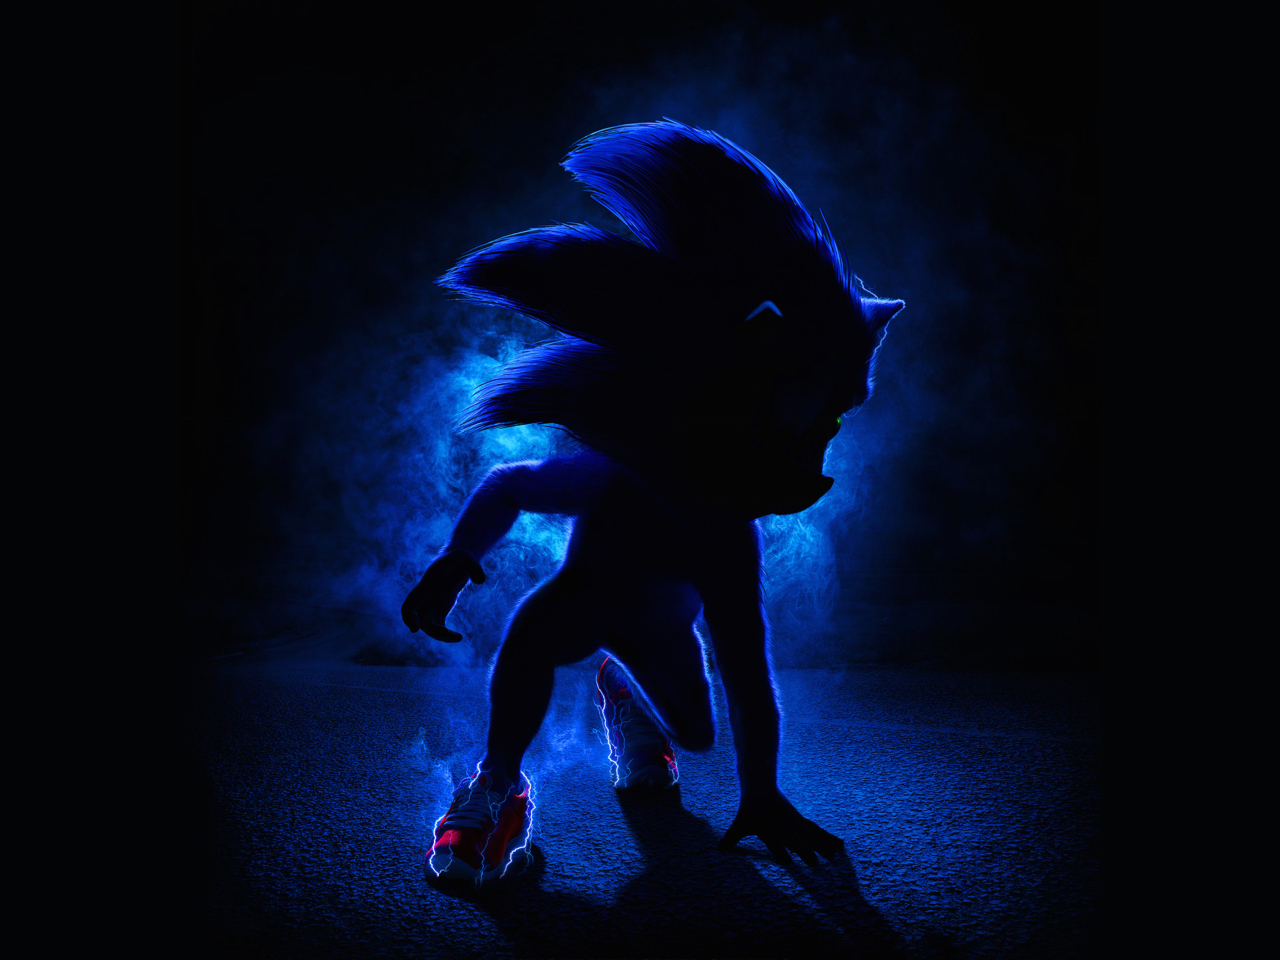 Sonic The Hedgehog 2019 Movie Poster, HD 4K Wallpaper1280 x 960